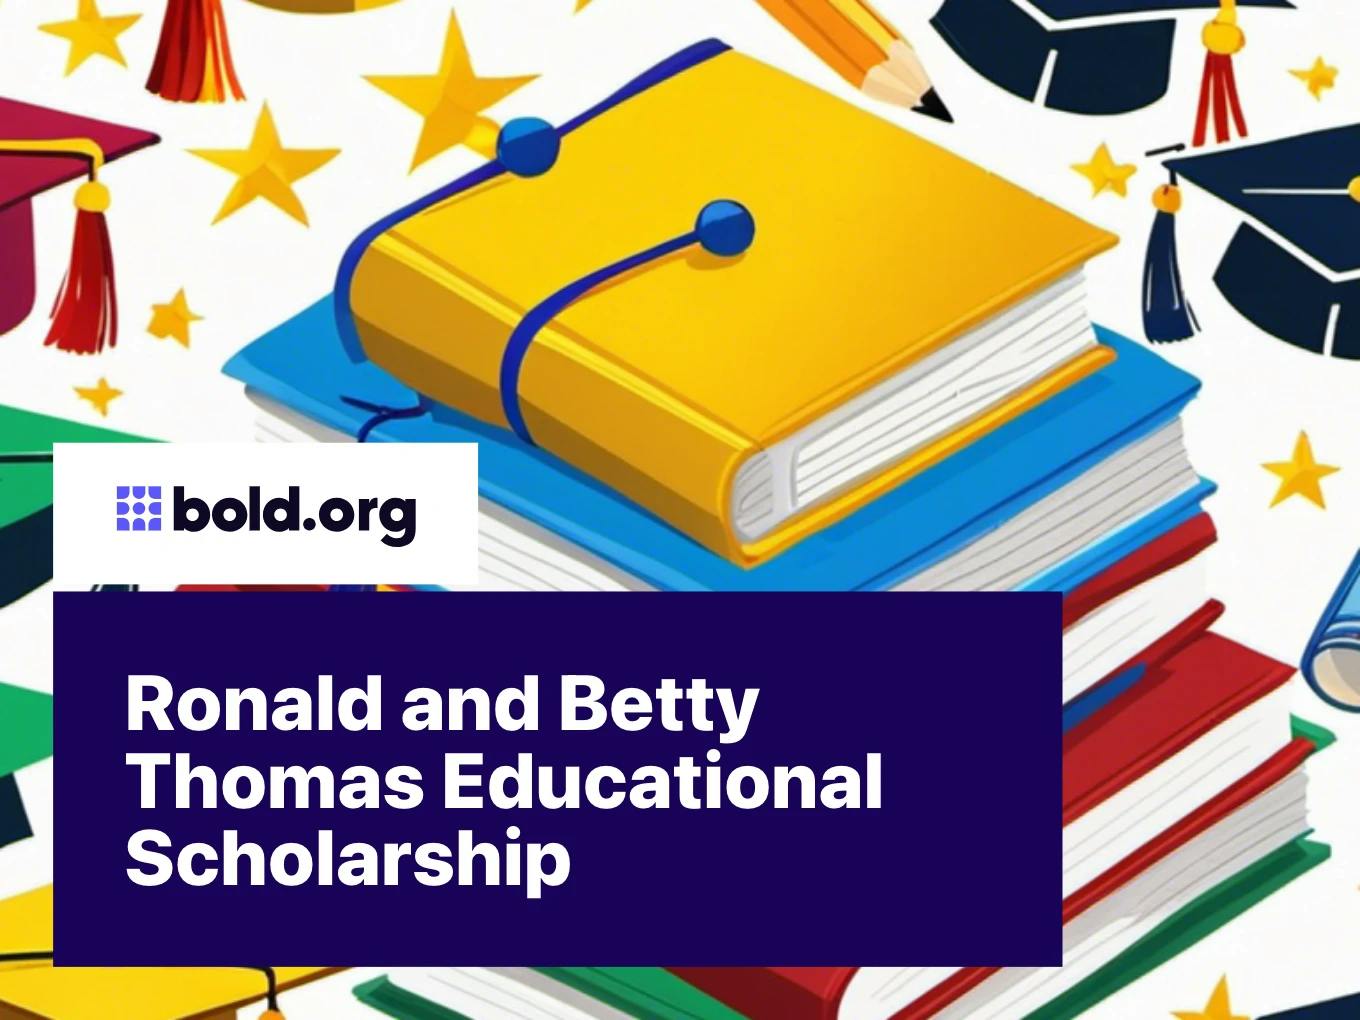 Ronald and Betty Thomas Educational Scholarship